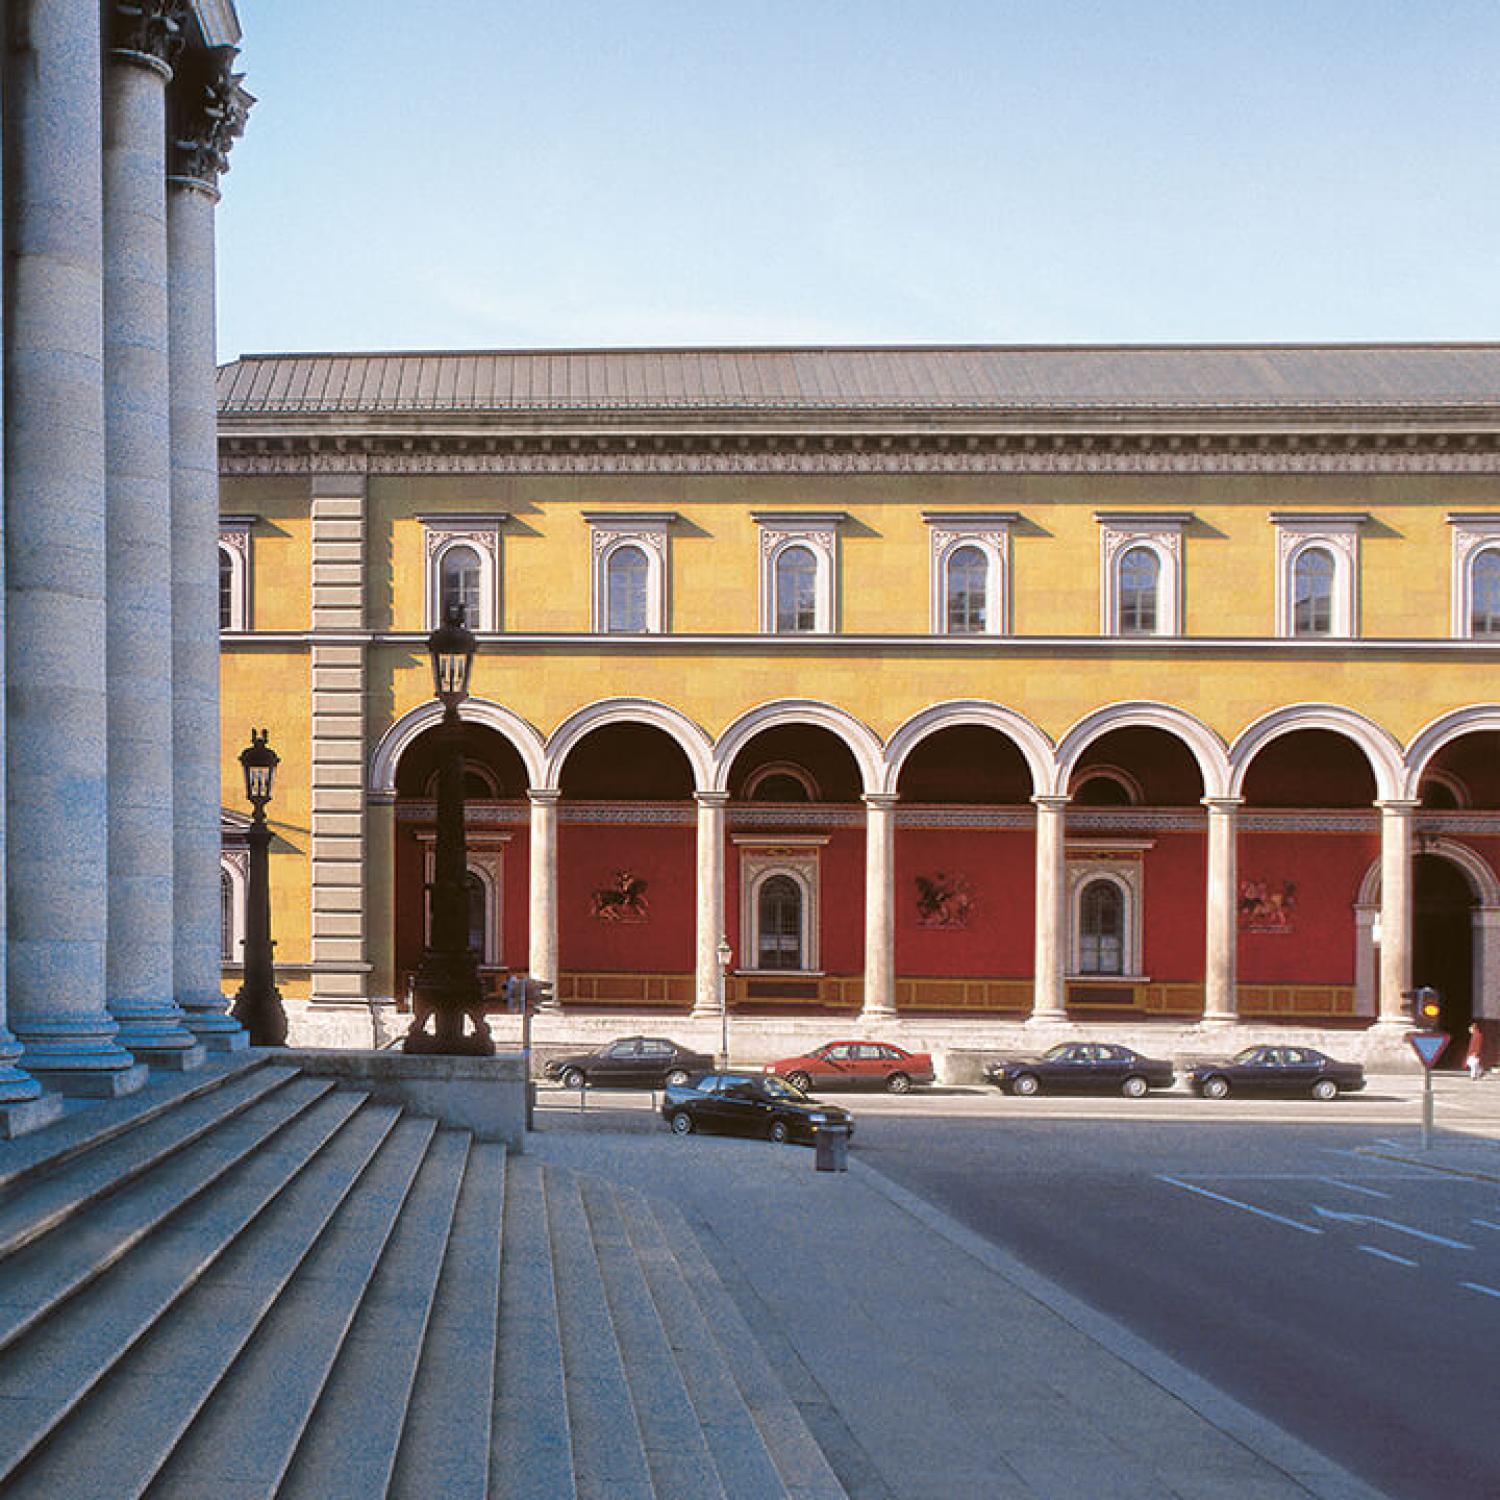 Das Palais an der Oper in München